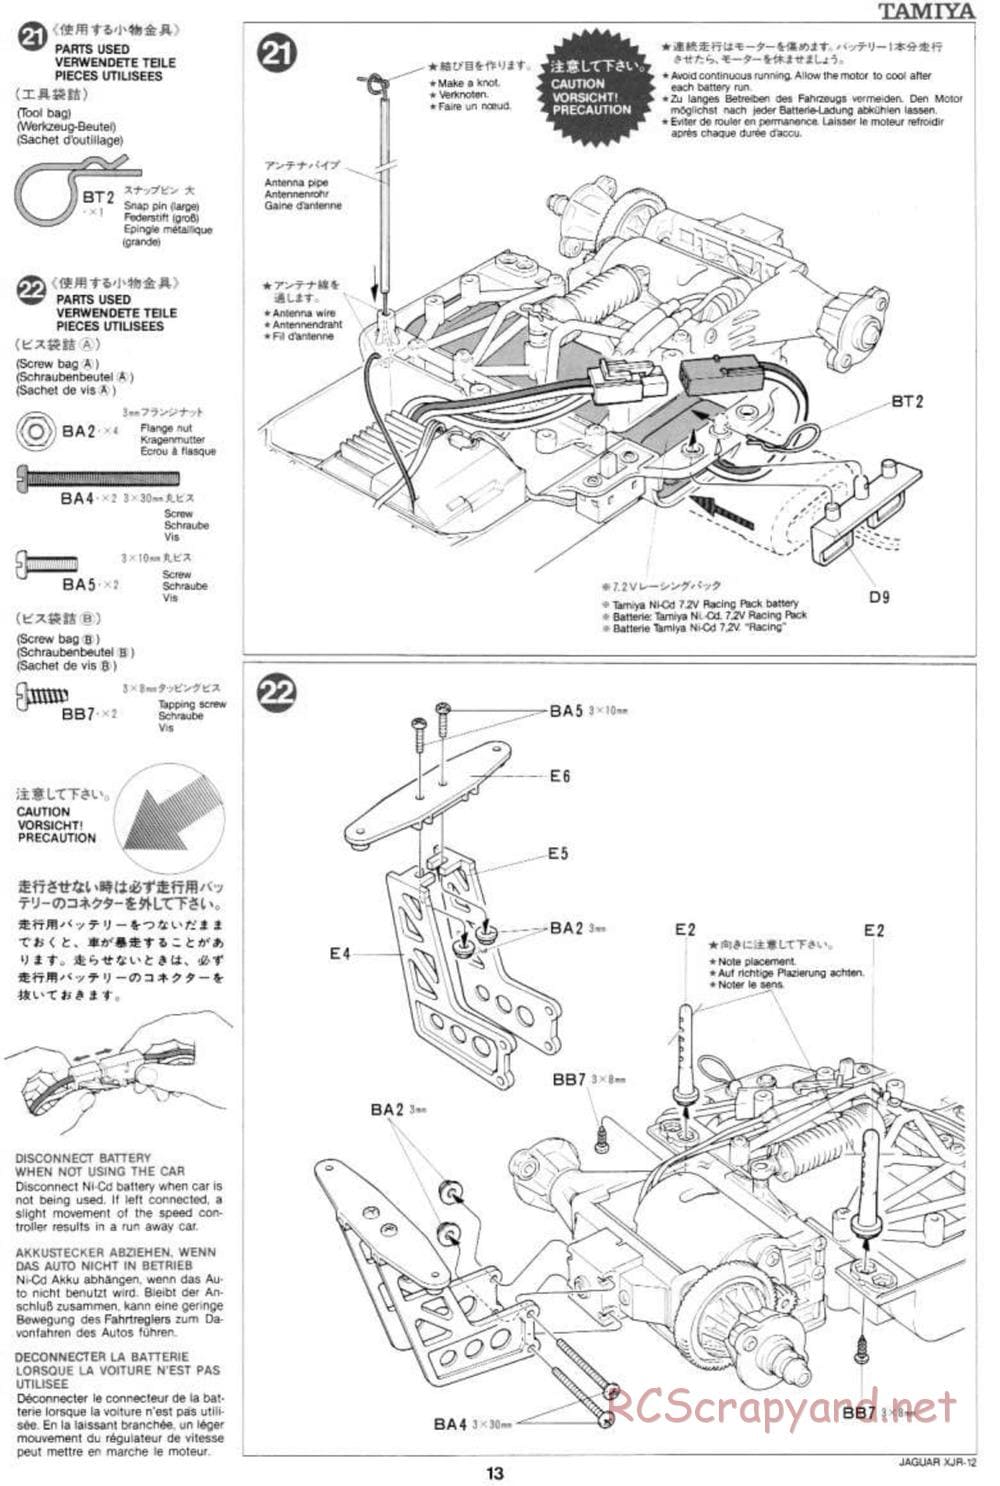 Tamiya - Jaguar XJR-12 Daytona Winner - Group-C Chassis - Manual - Page 13